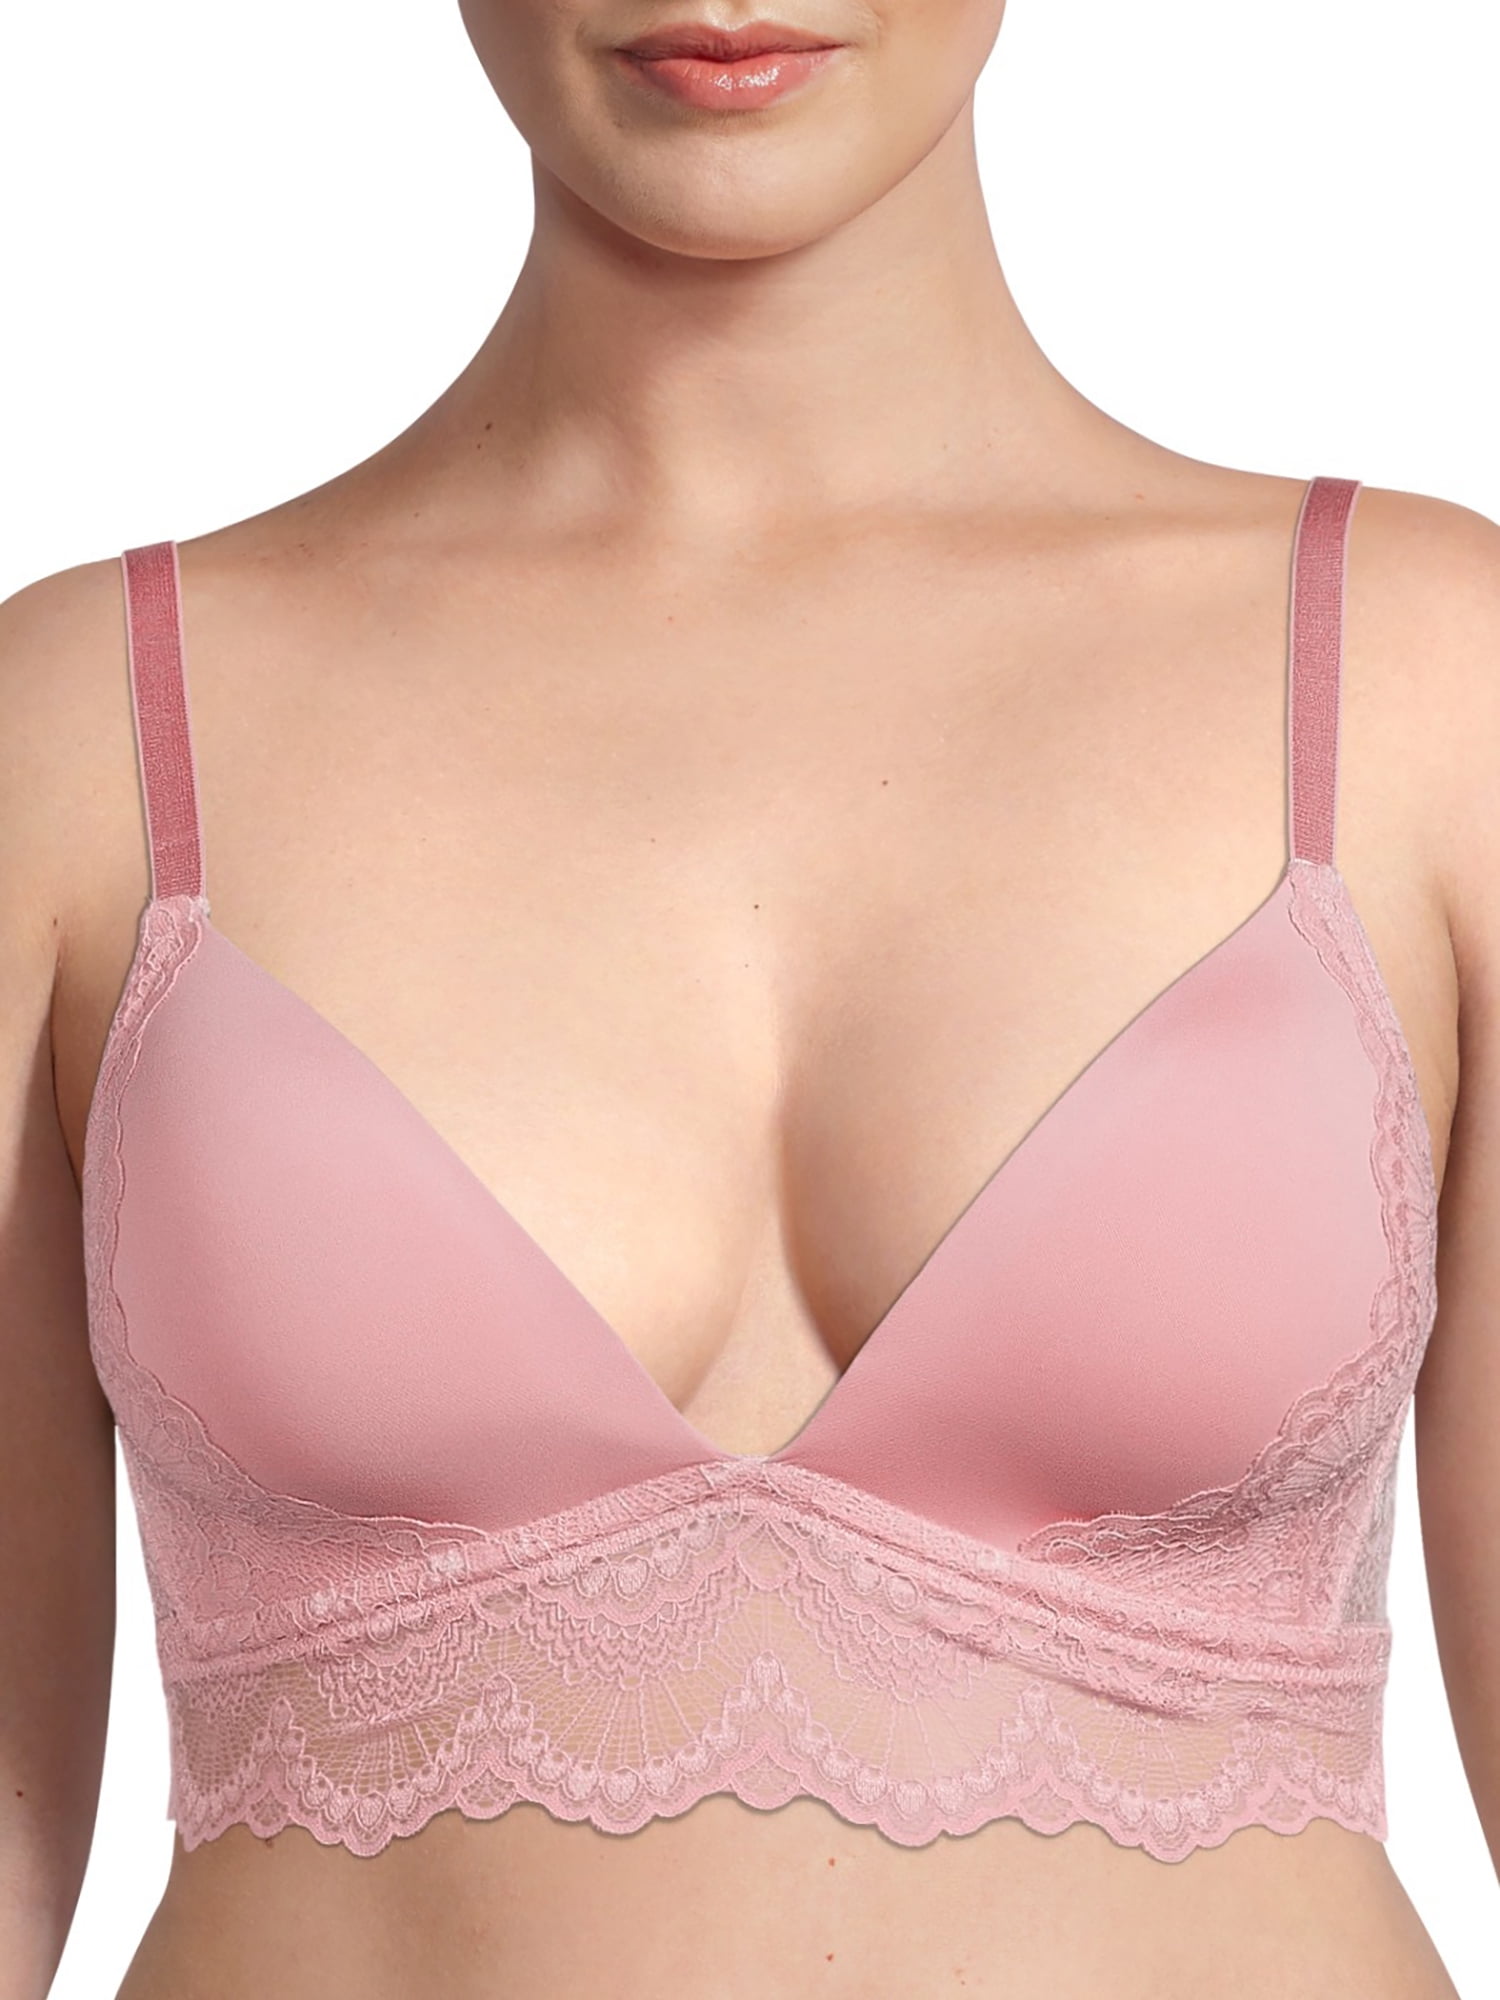 Jessica Simpson Bra Pink Size 36 C - $20 (72% Off Retail) New